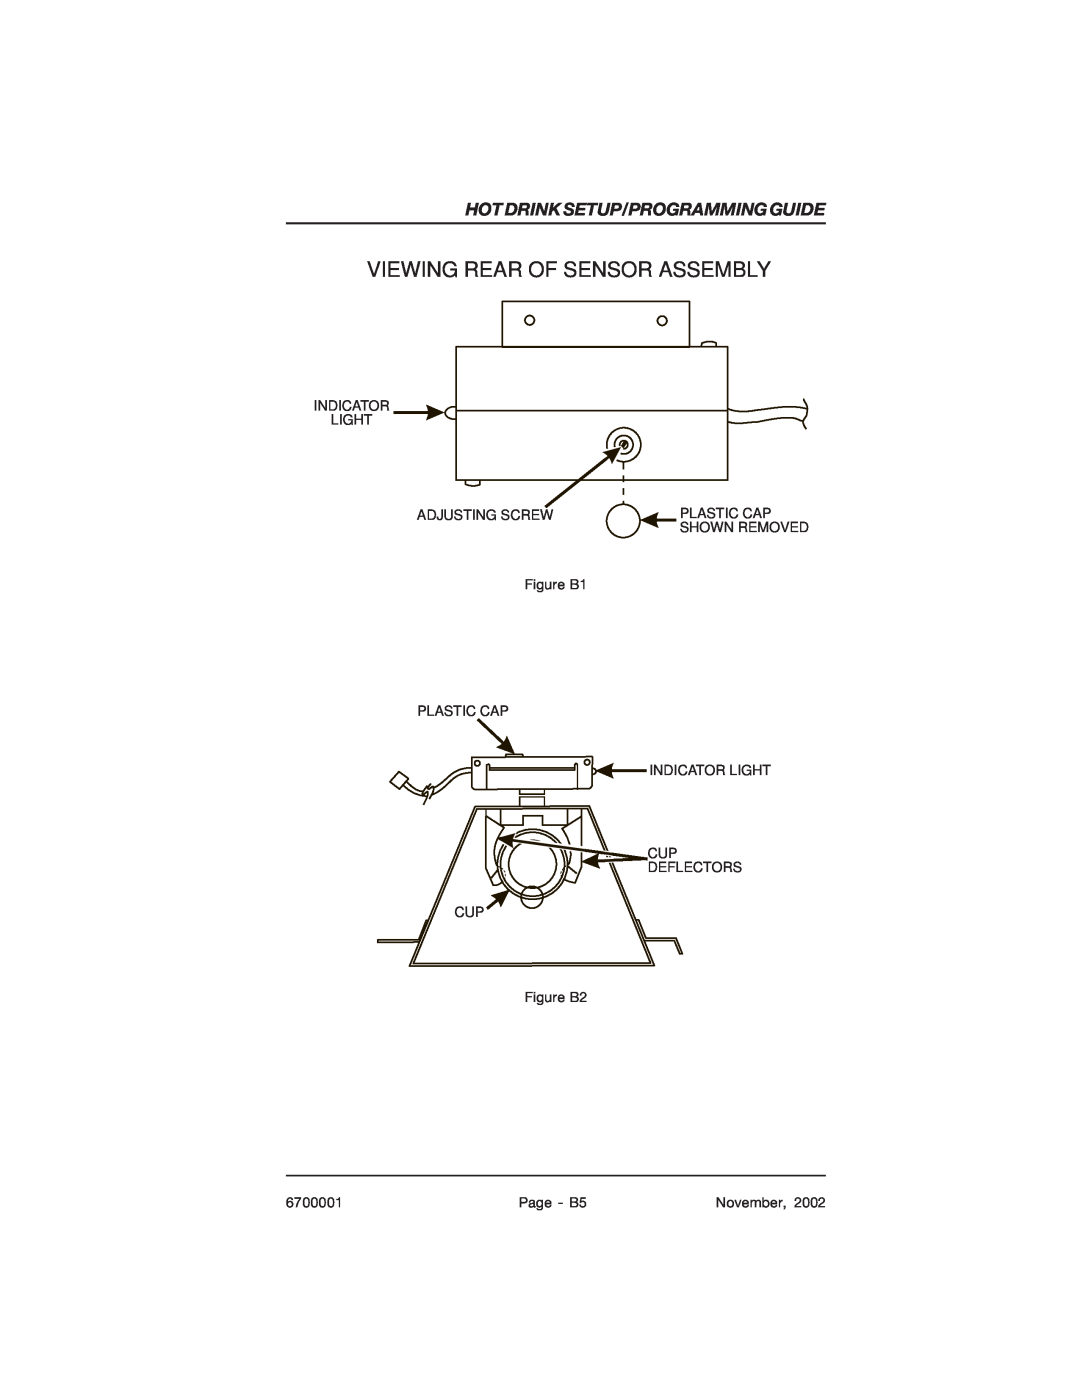 Crane Merchandising Systems 678, 670 Viewing Rear Of Sensor Assembly, Hot Drink Setup/Programming Guide, Indicator Light 